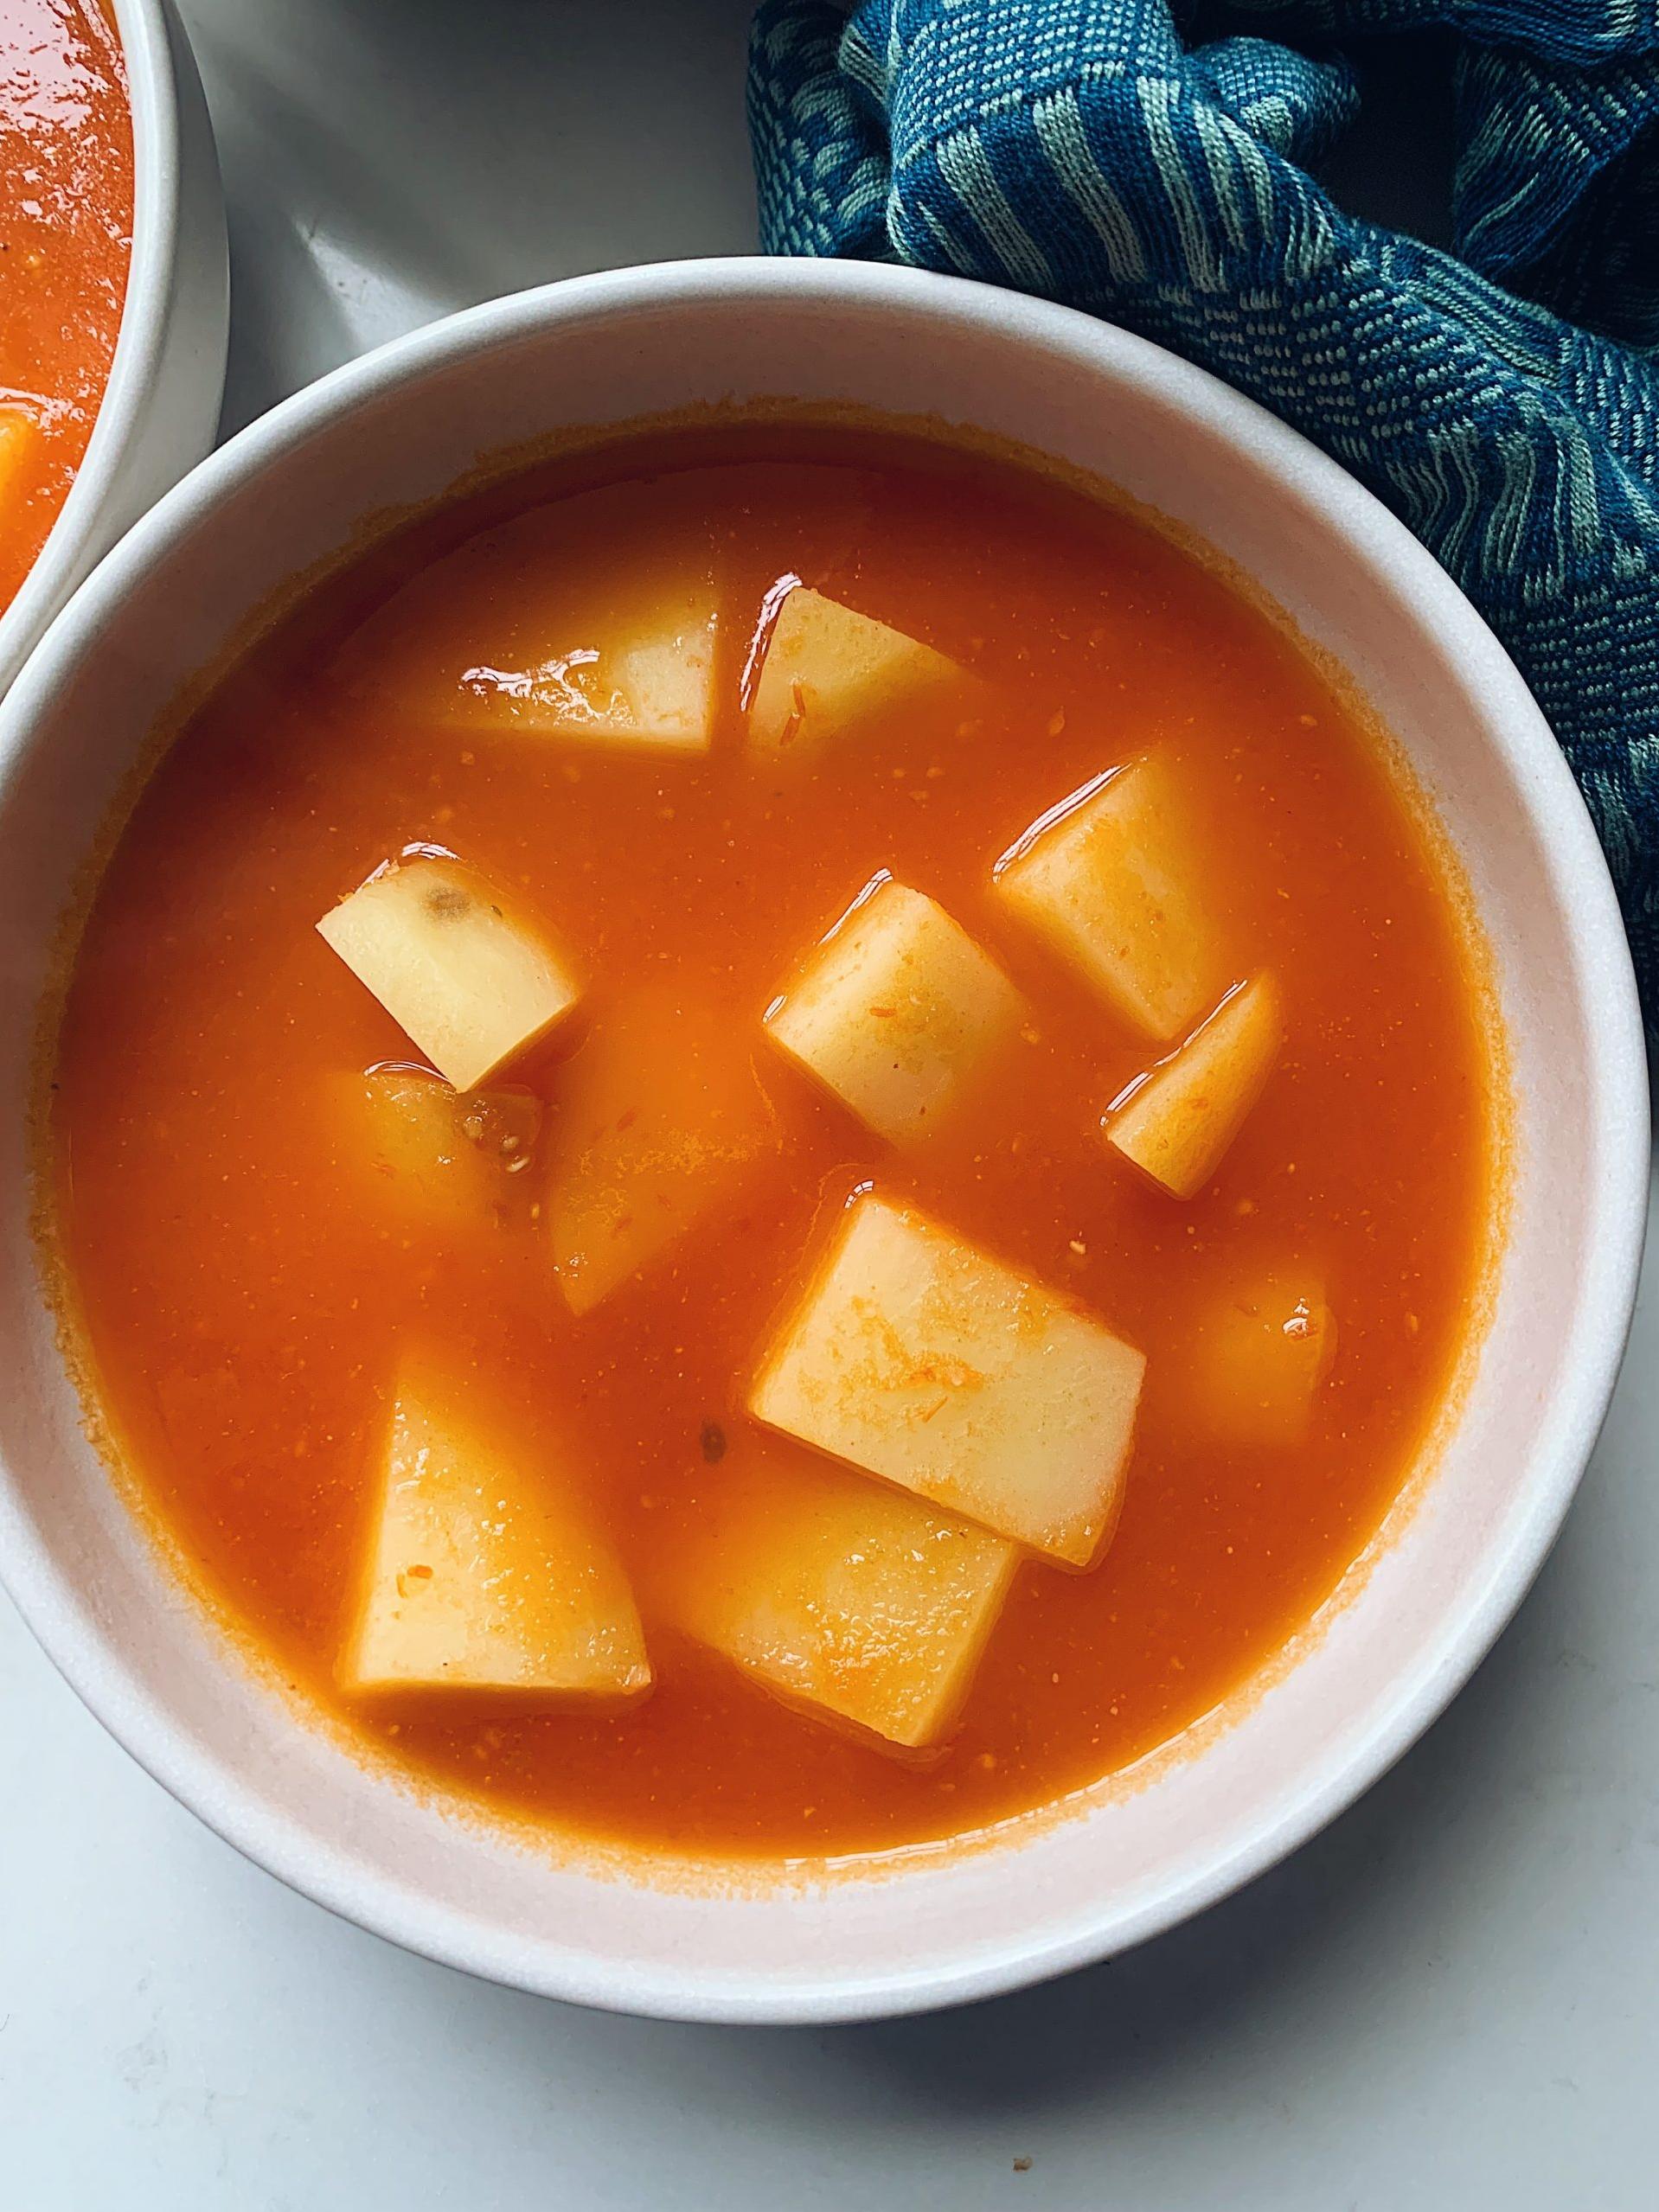  Warm your soul with this delicious sopa de papa.